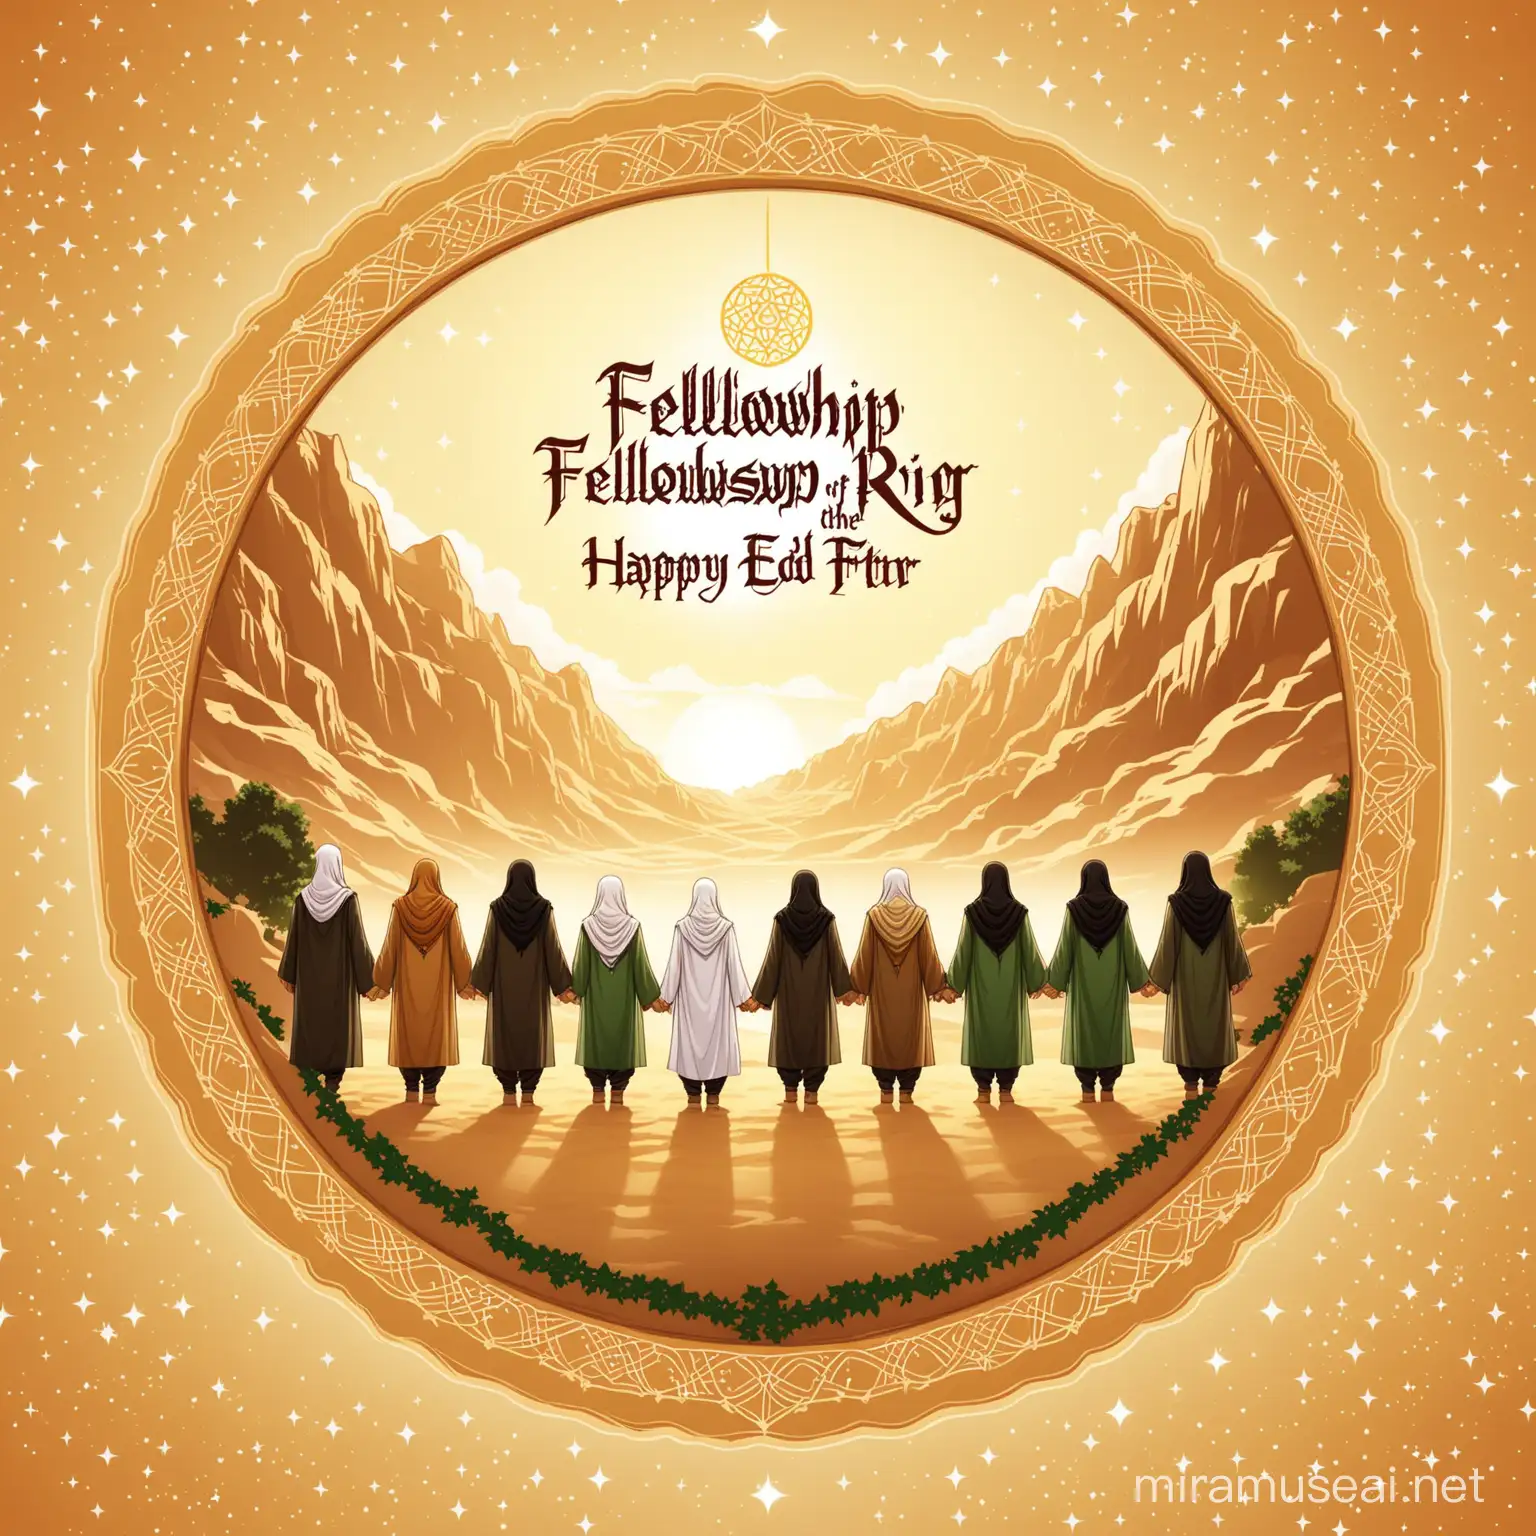 Fellowship of the Ring Celebrating Eid alFitr Joyously